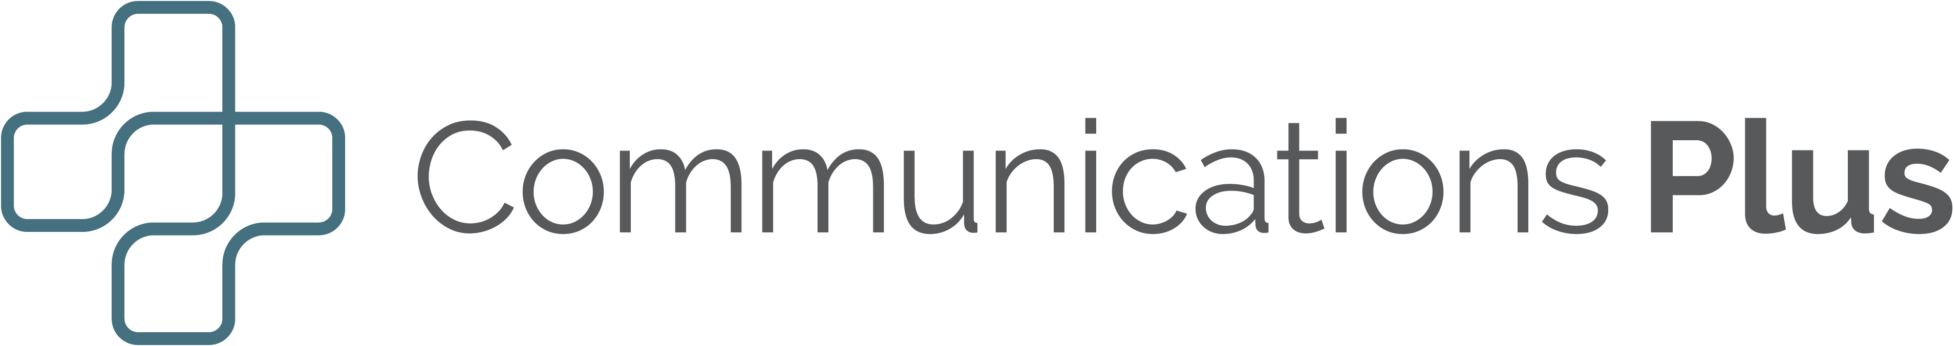 Communications Plus logo